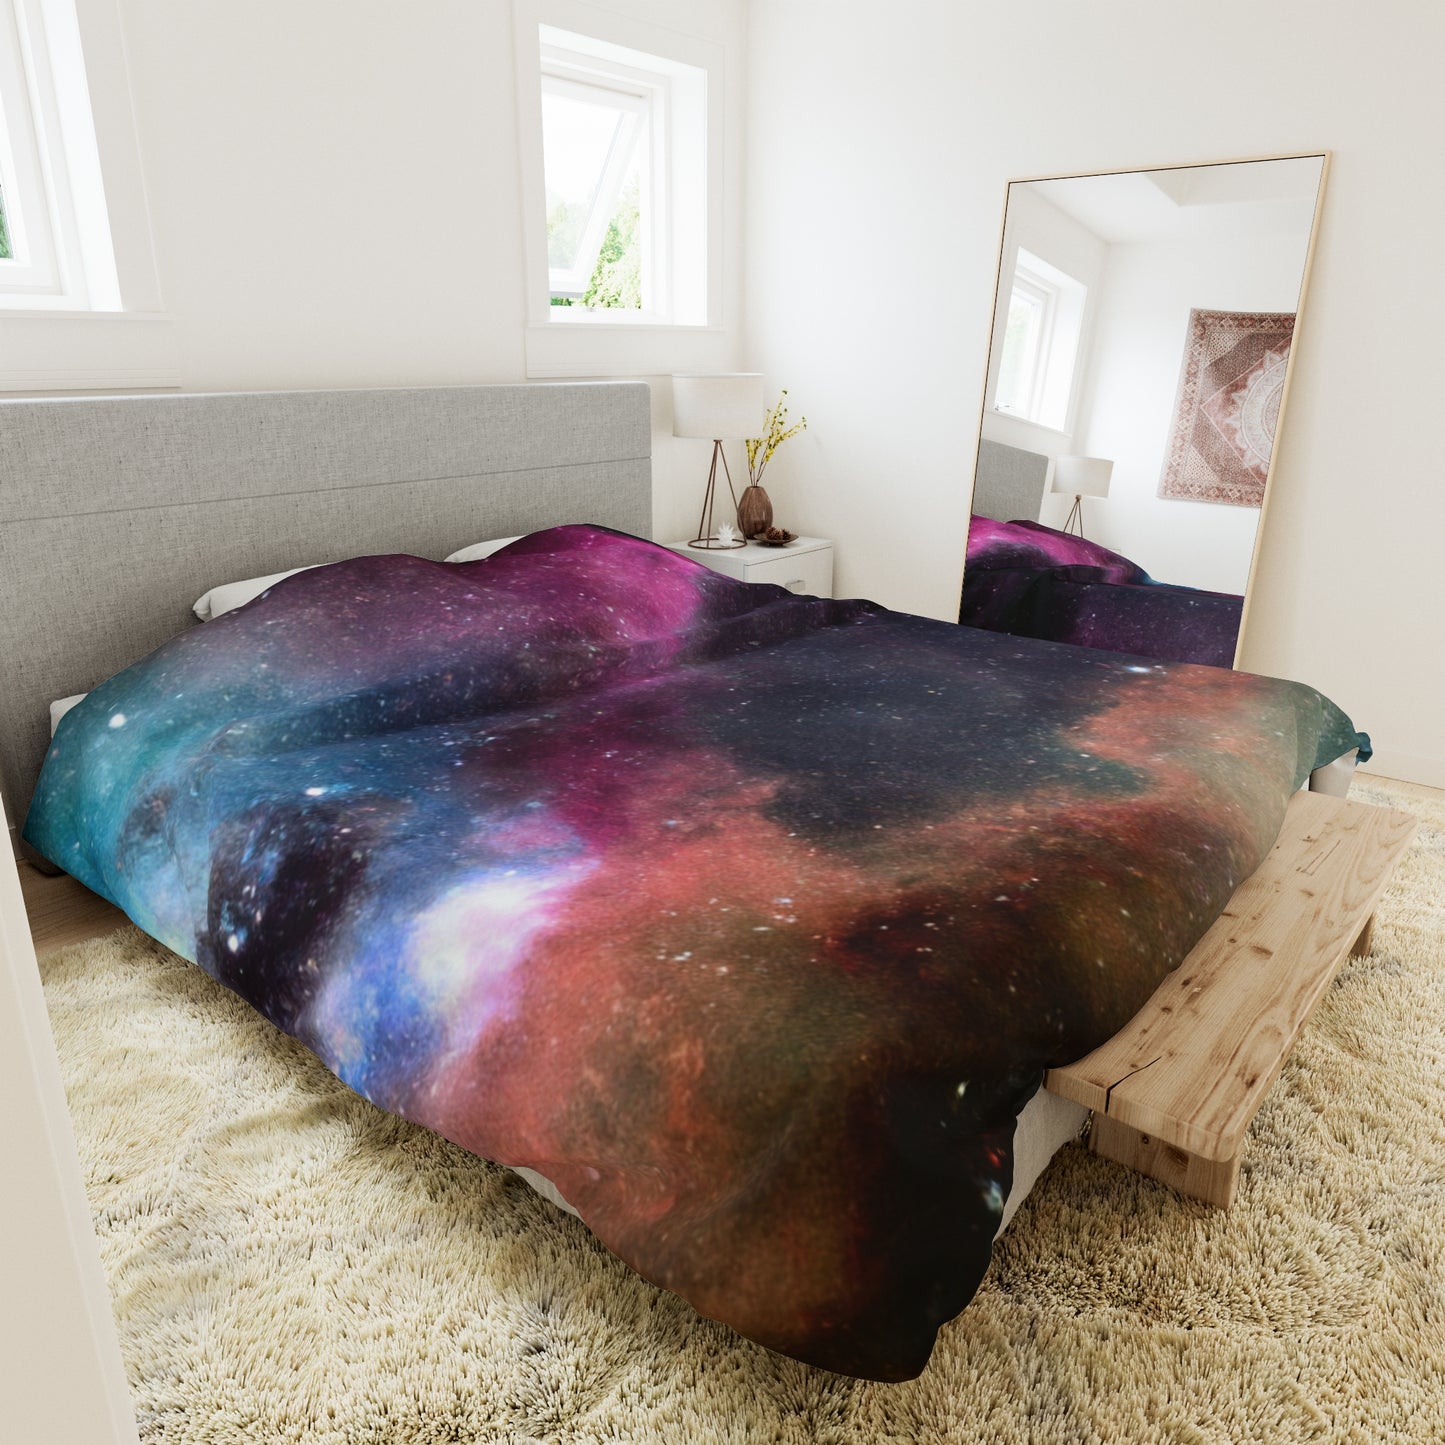 Alice's Interdimensional Odyssey - Astronomy Duvet Bed Cover